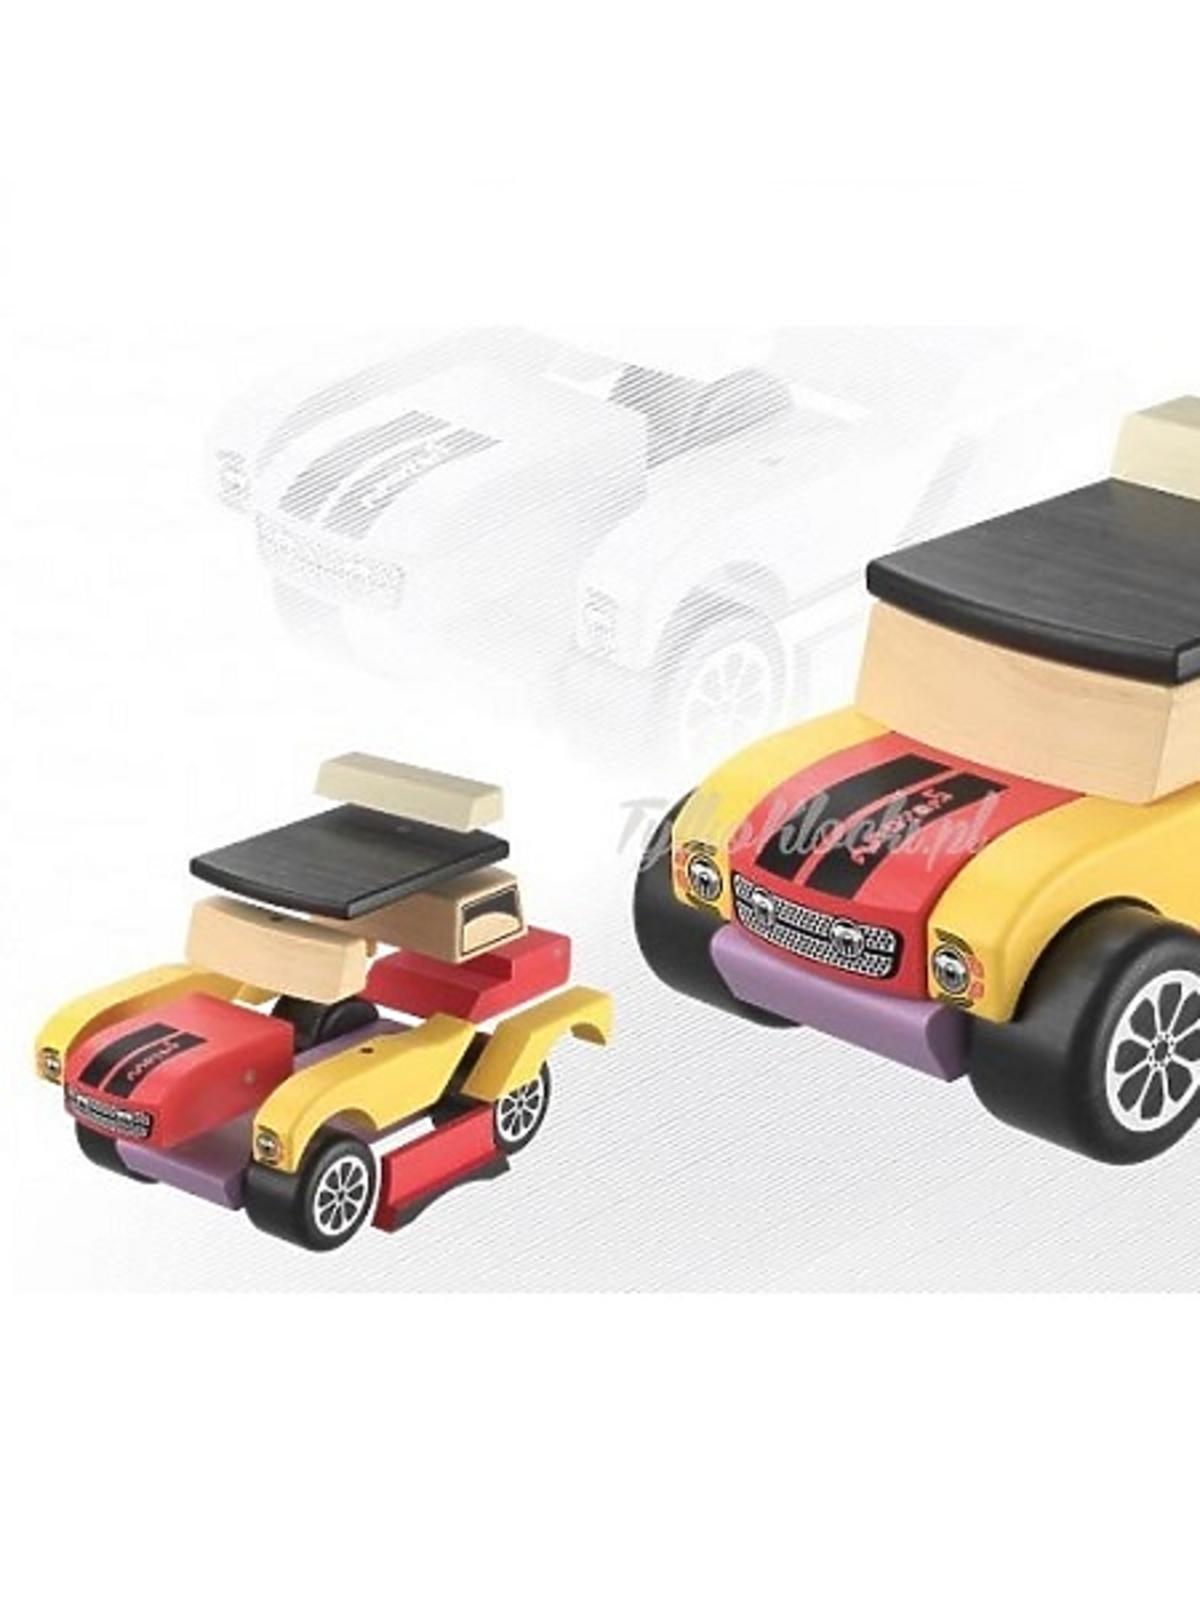 Samochód MINI COOPER na magnesy - katalog produktów dla dzieci na Babyonlinepl.jpg